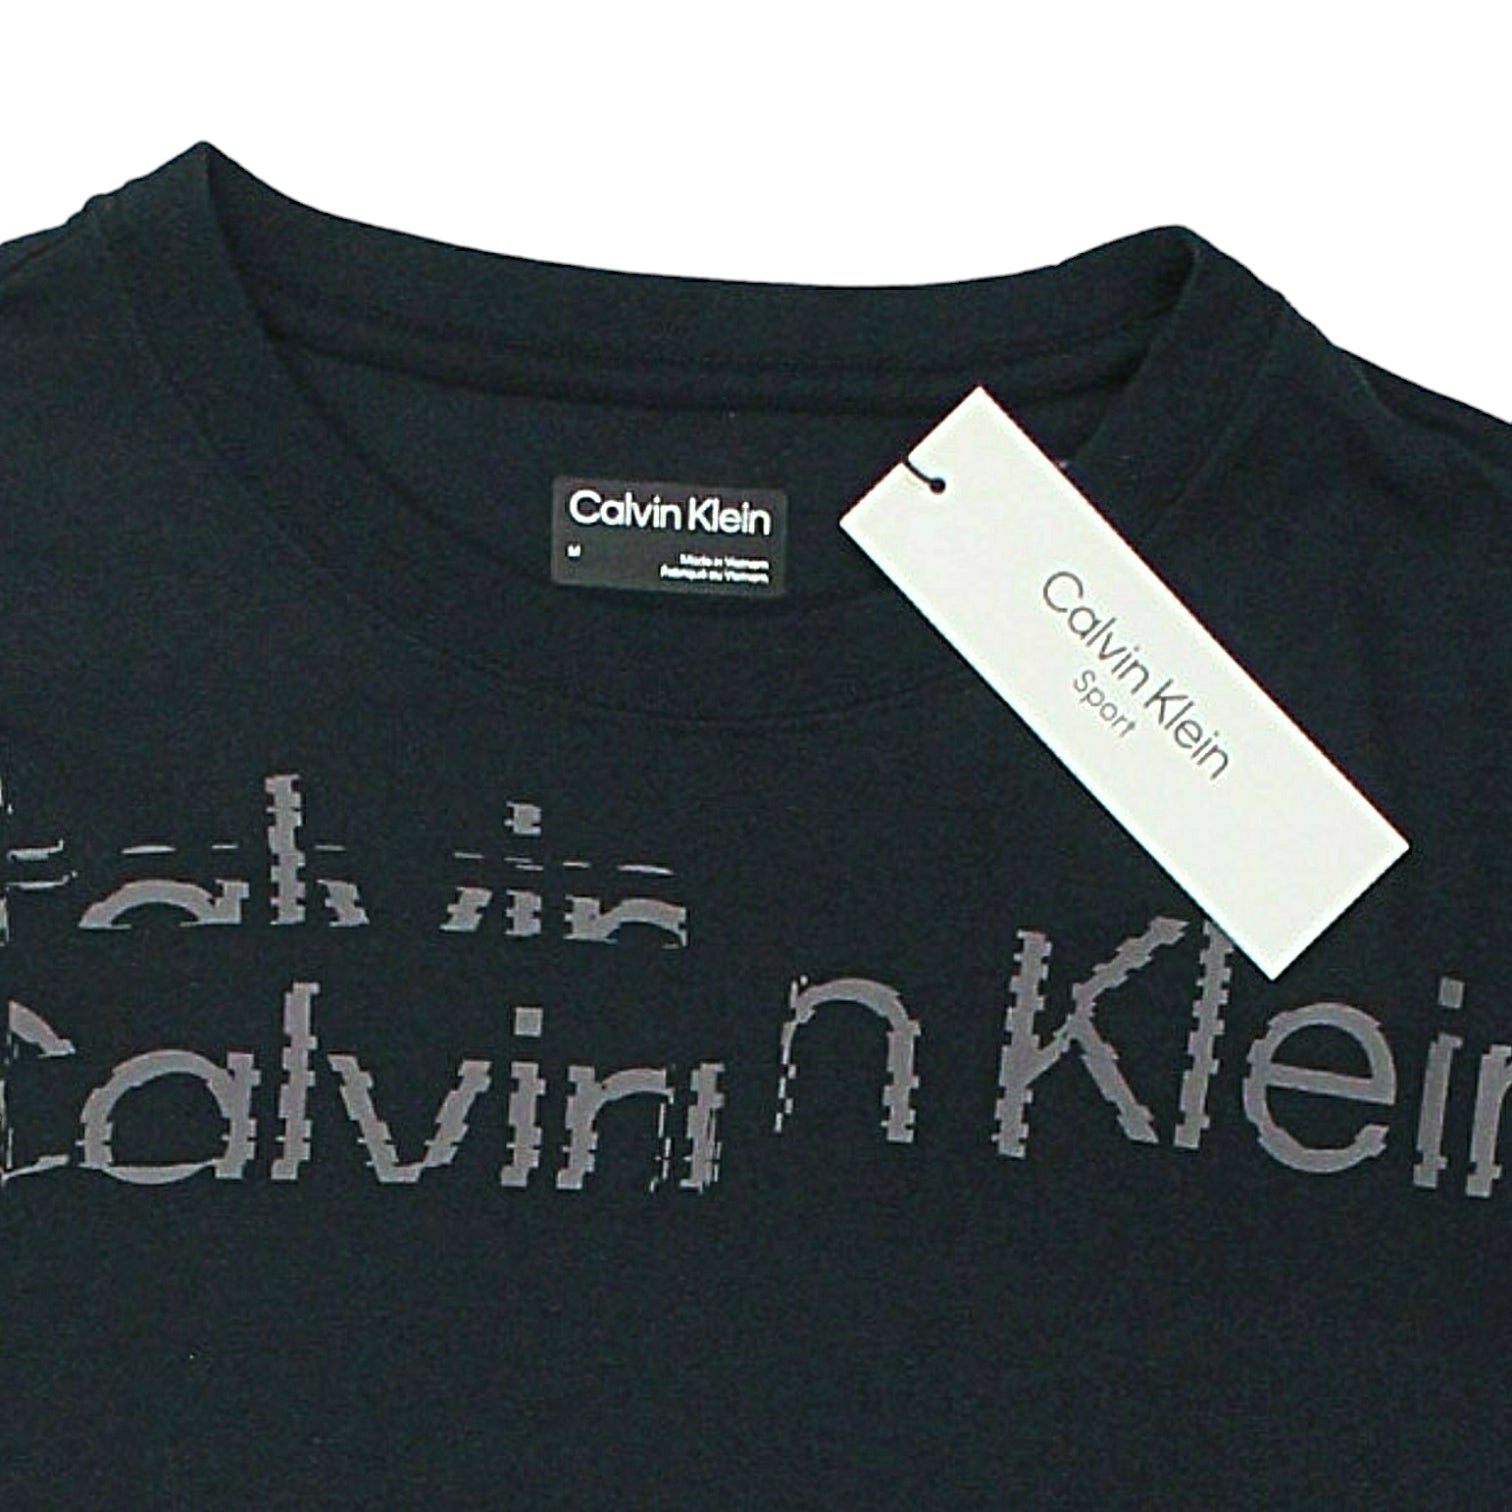 Calvin Klein Black Pixelated Graphic Tee